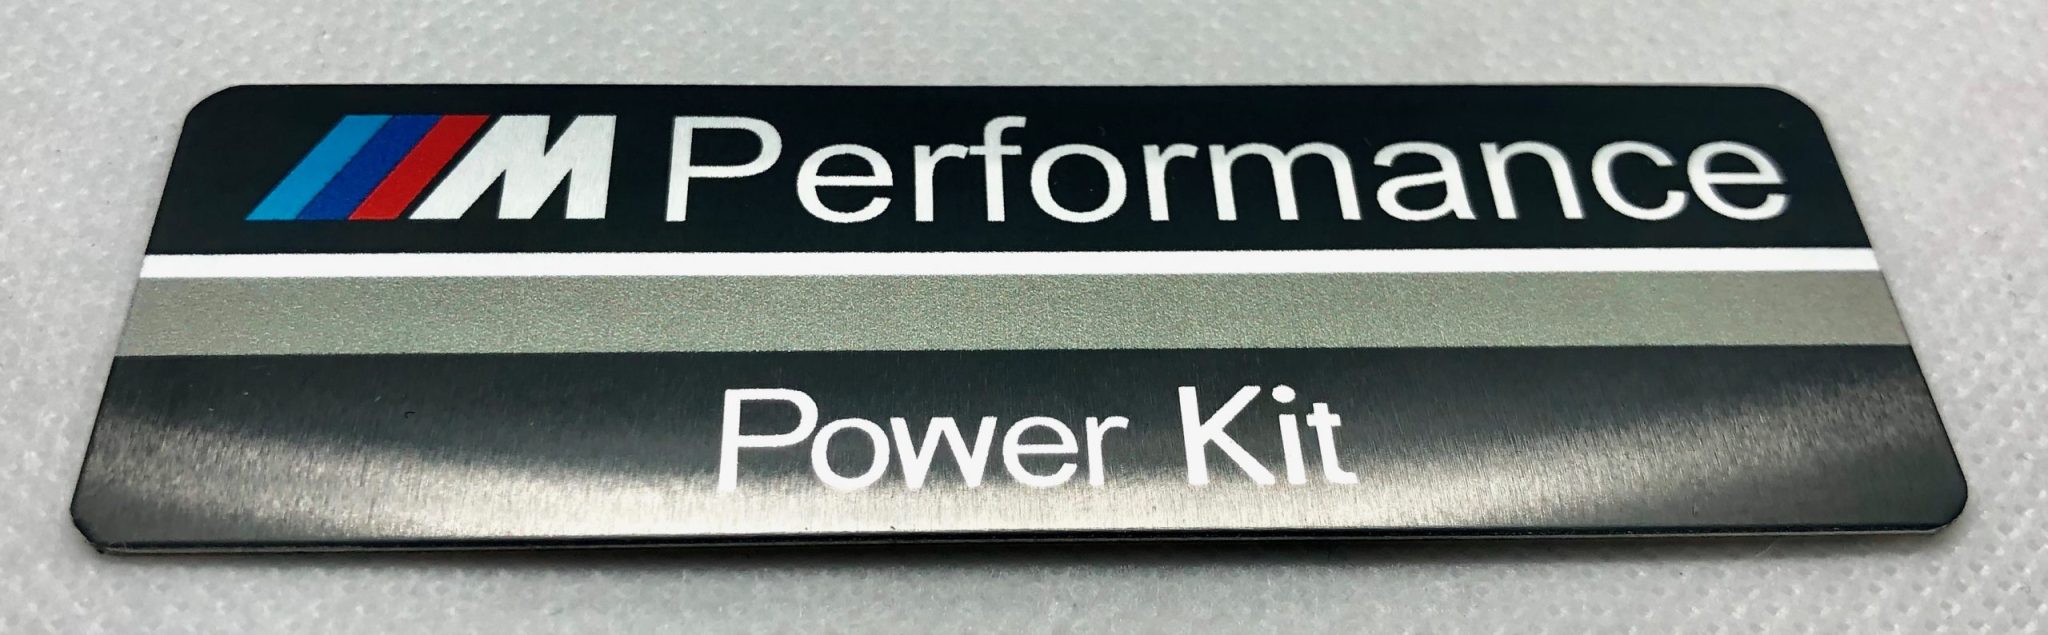 3M Aluminum BMW M Performance Power Kit logo